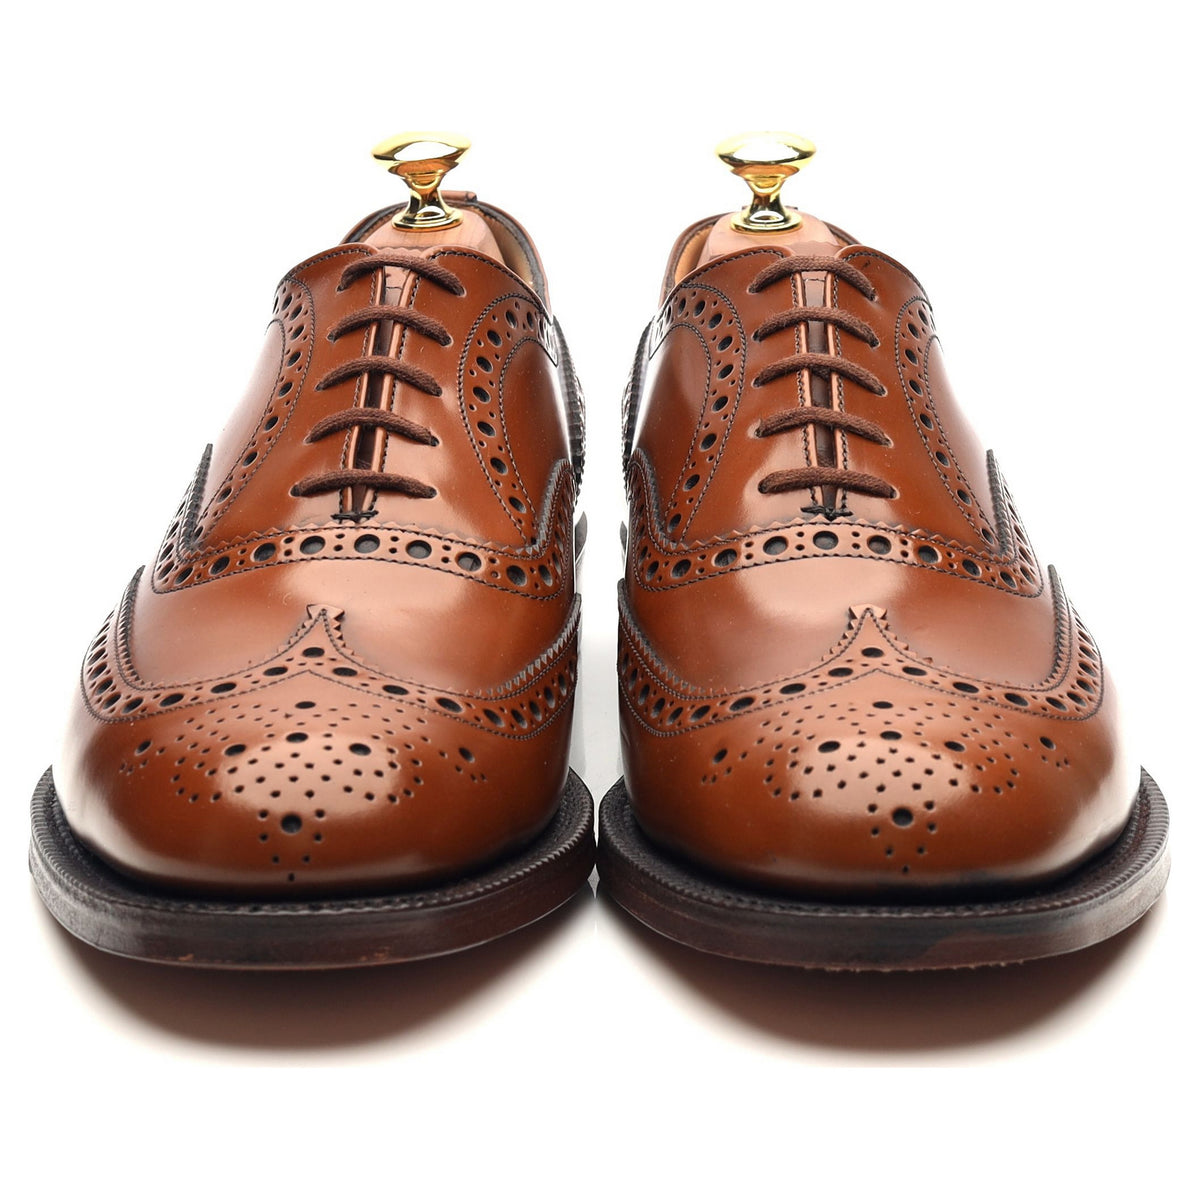 Buy Burwood Men's Leather Formal Shoes online | Looksgud.in